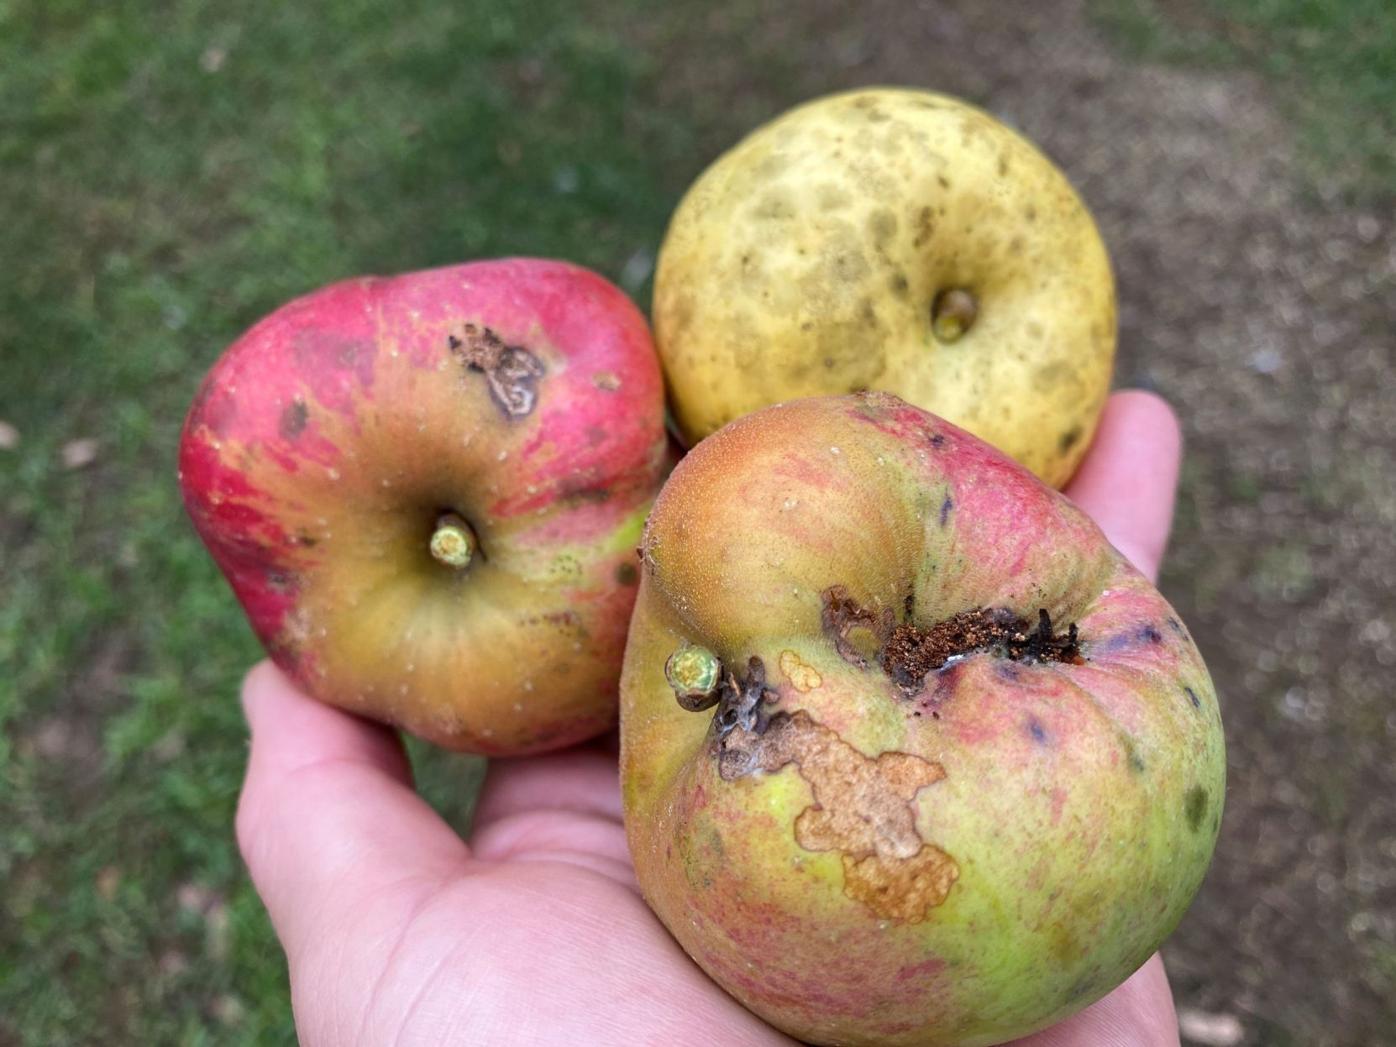 Where to score fresh Honeycrisp apples around Indianapolis